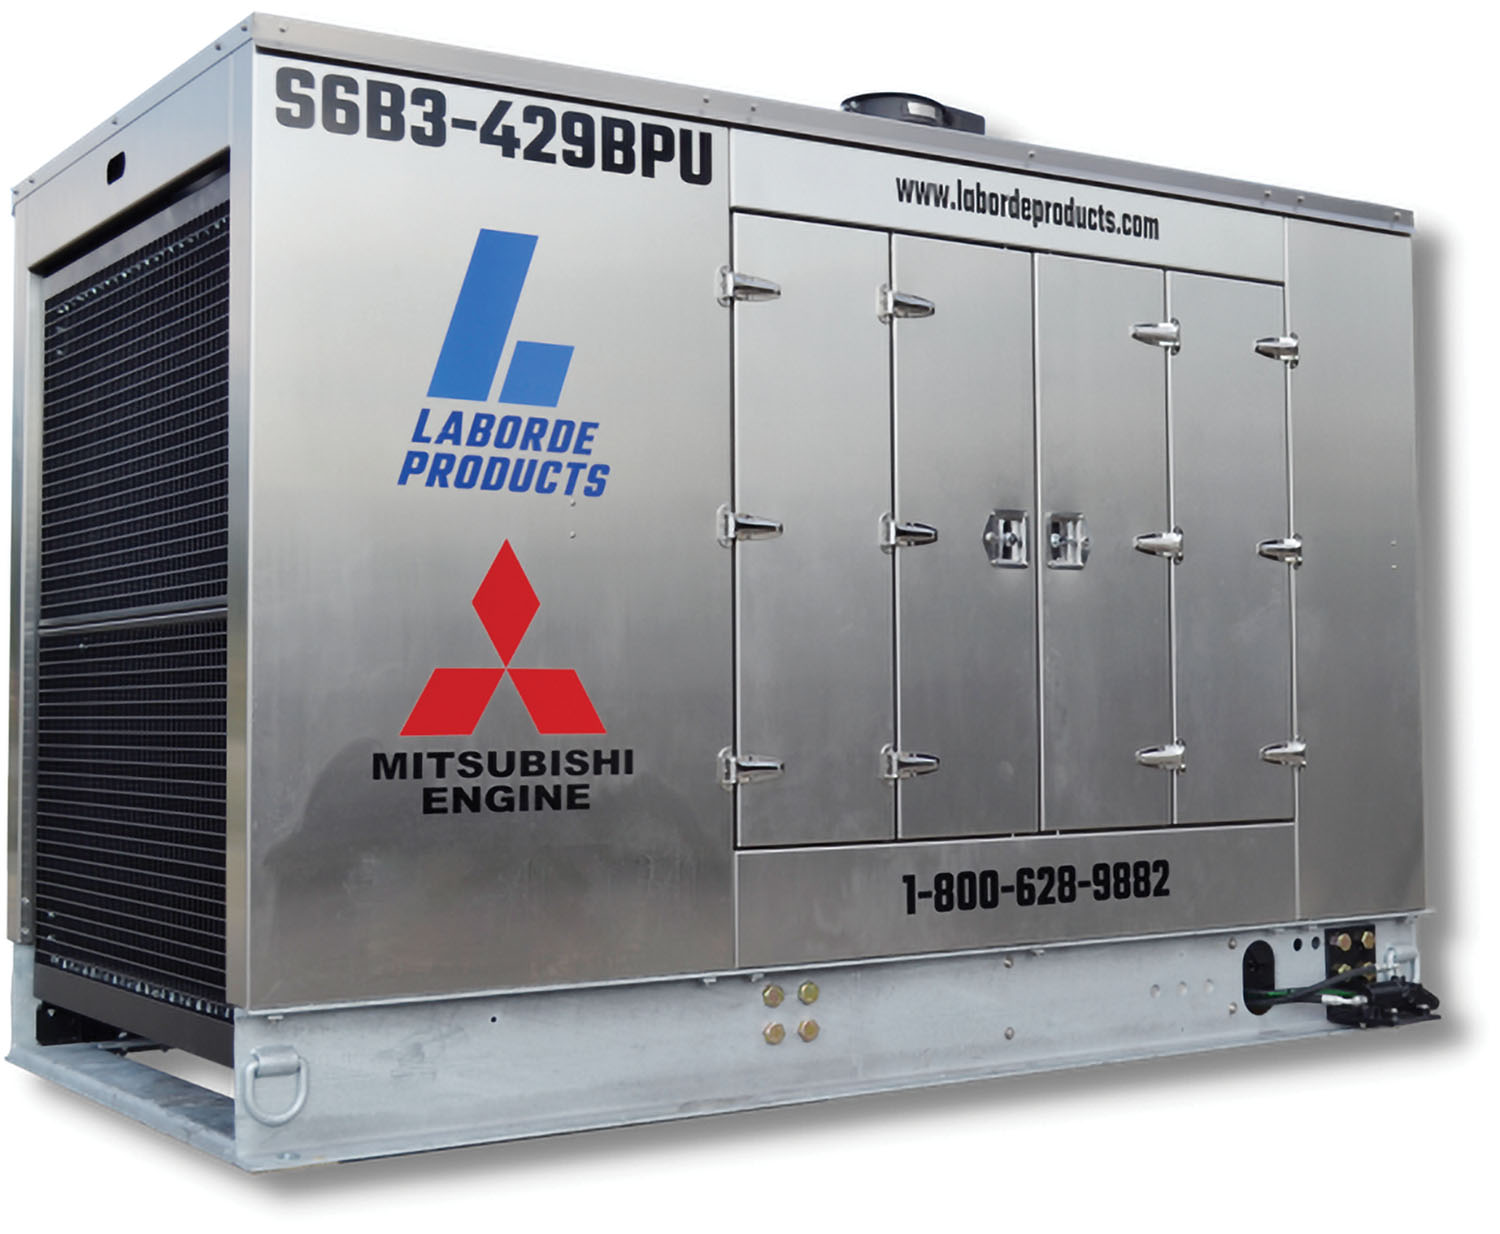 Laborde Products Mitsubishi barge power unit.